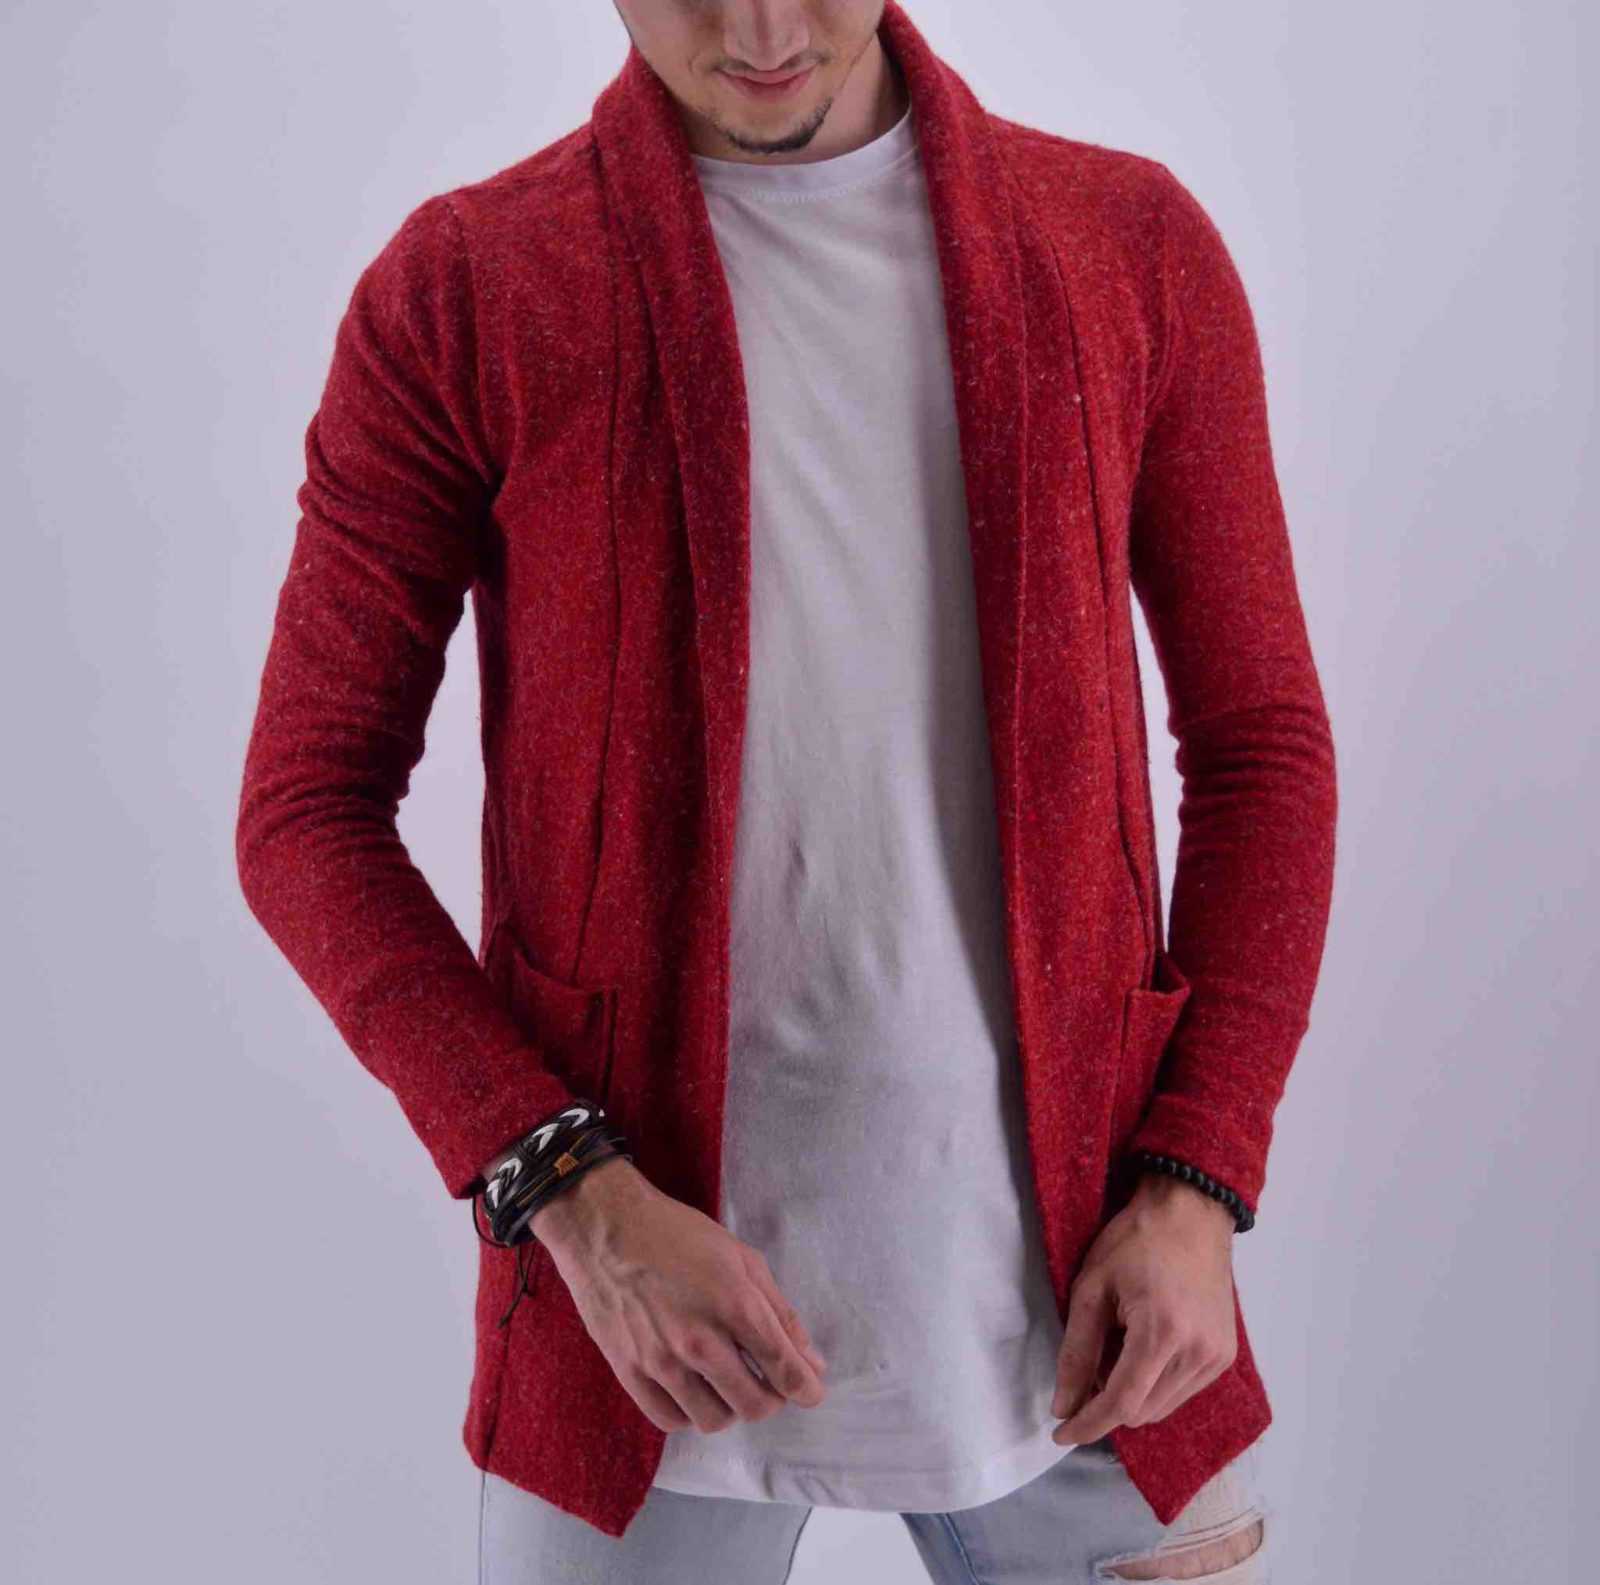 Gilet Oversize Homme Rouge Homme 19,99€ | Mode Urbaine